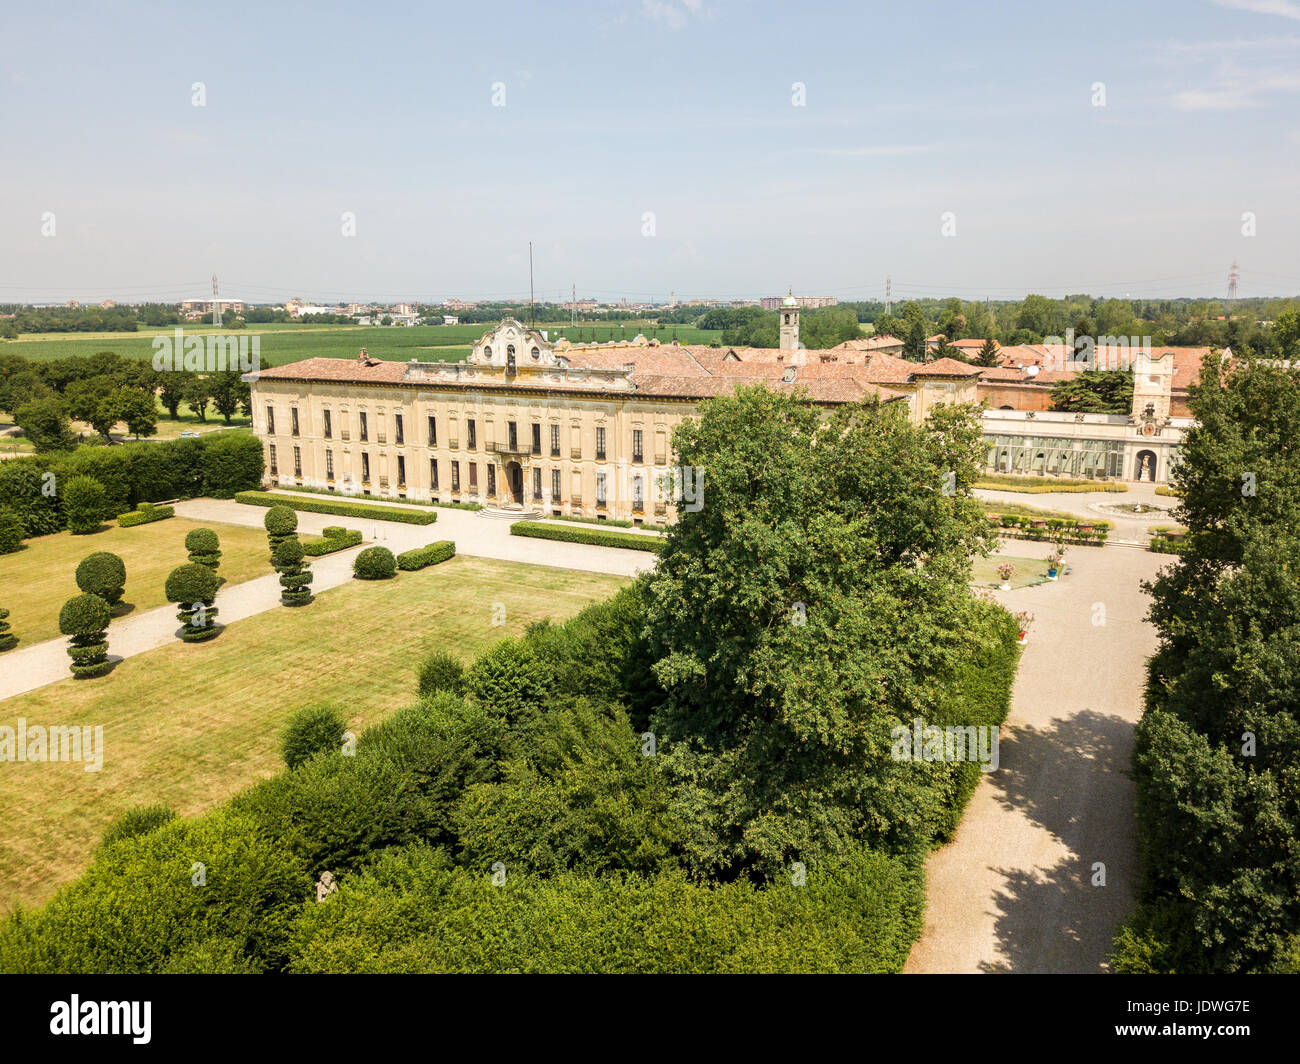 Villa Arconati, Castellazzo, Bollate, Mailand, Italien. Luftaufnahme der Villa Arconati 21.06.2017. Gärten und Parks, Groane Park. Palast, Barock pal Stockfoto